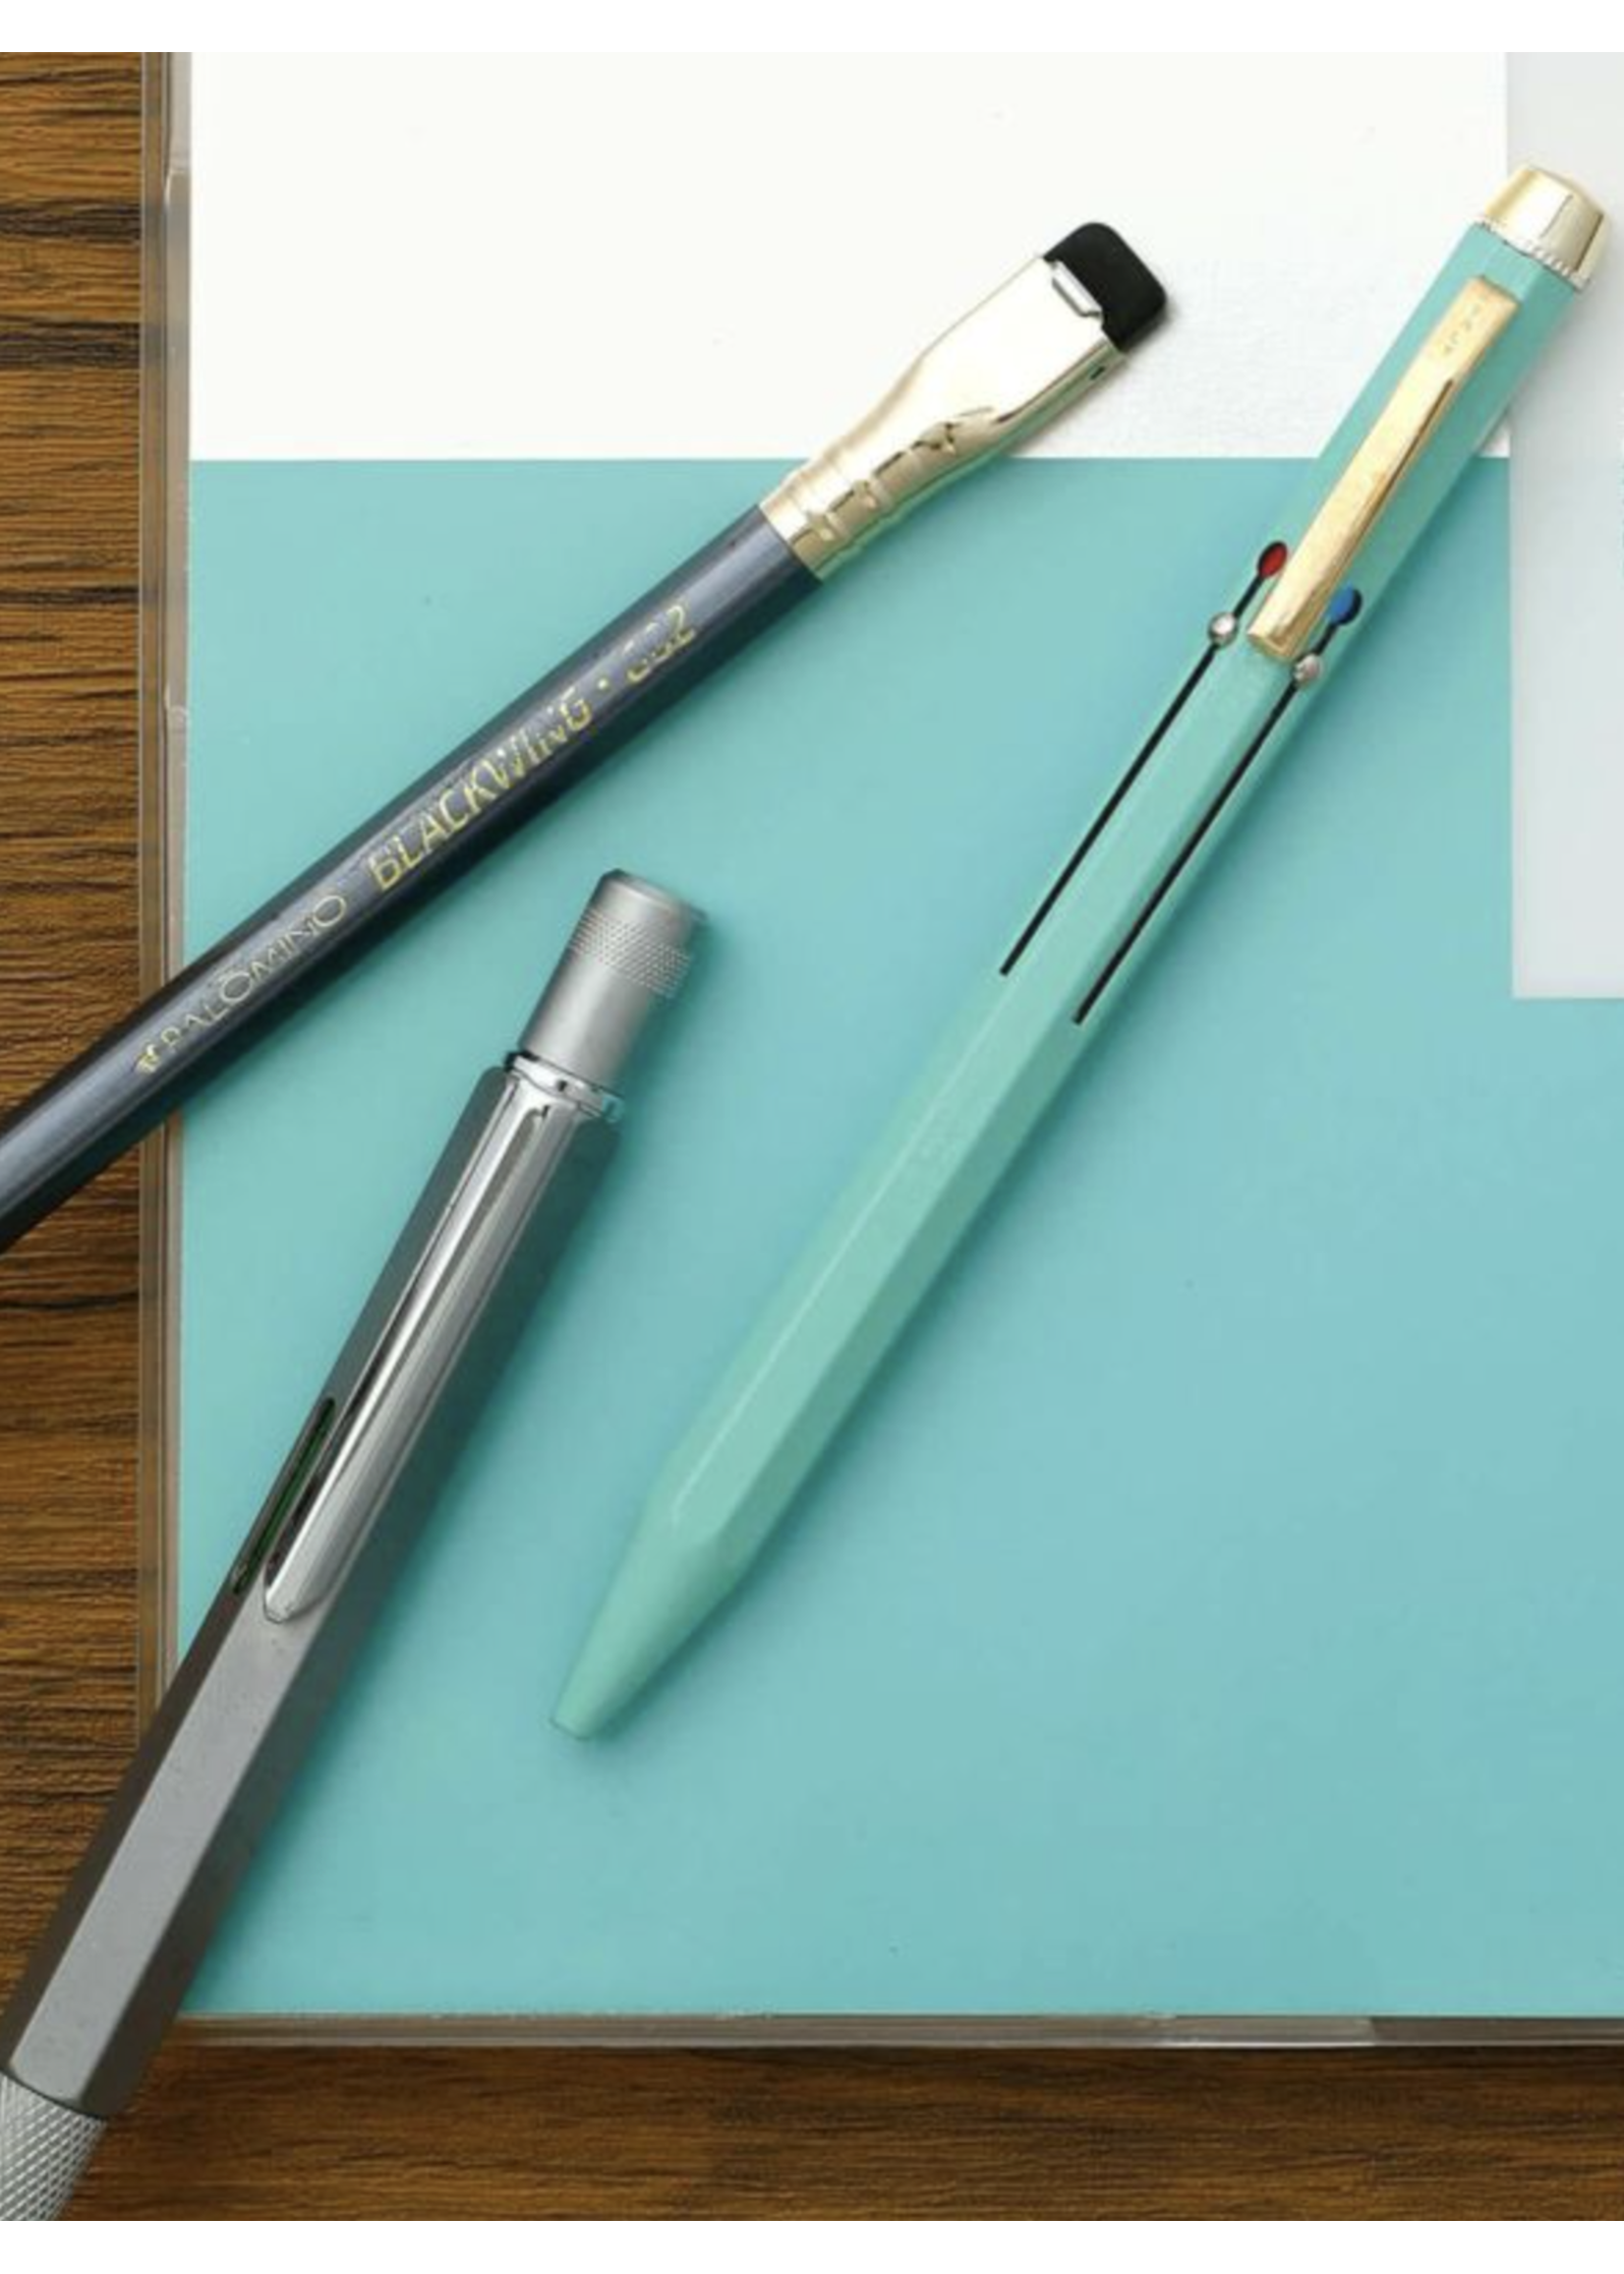 Penco Ballpoint Pen - Black - 4 Colors